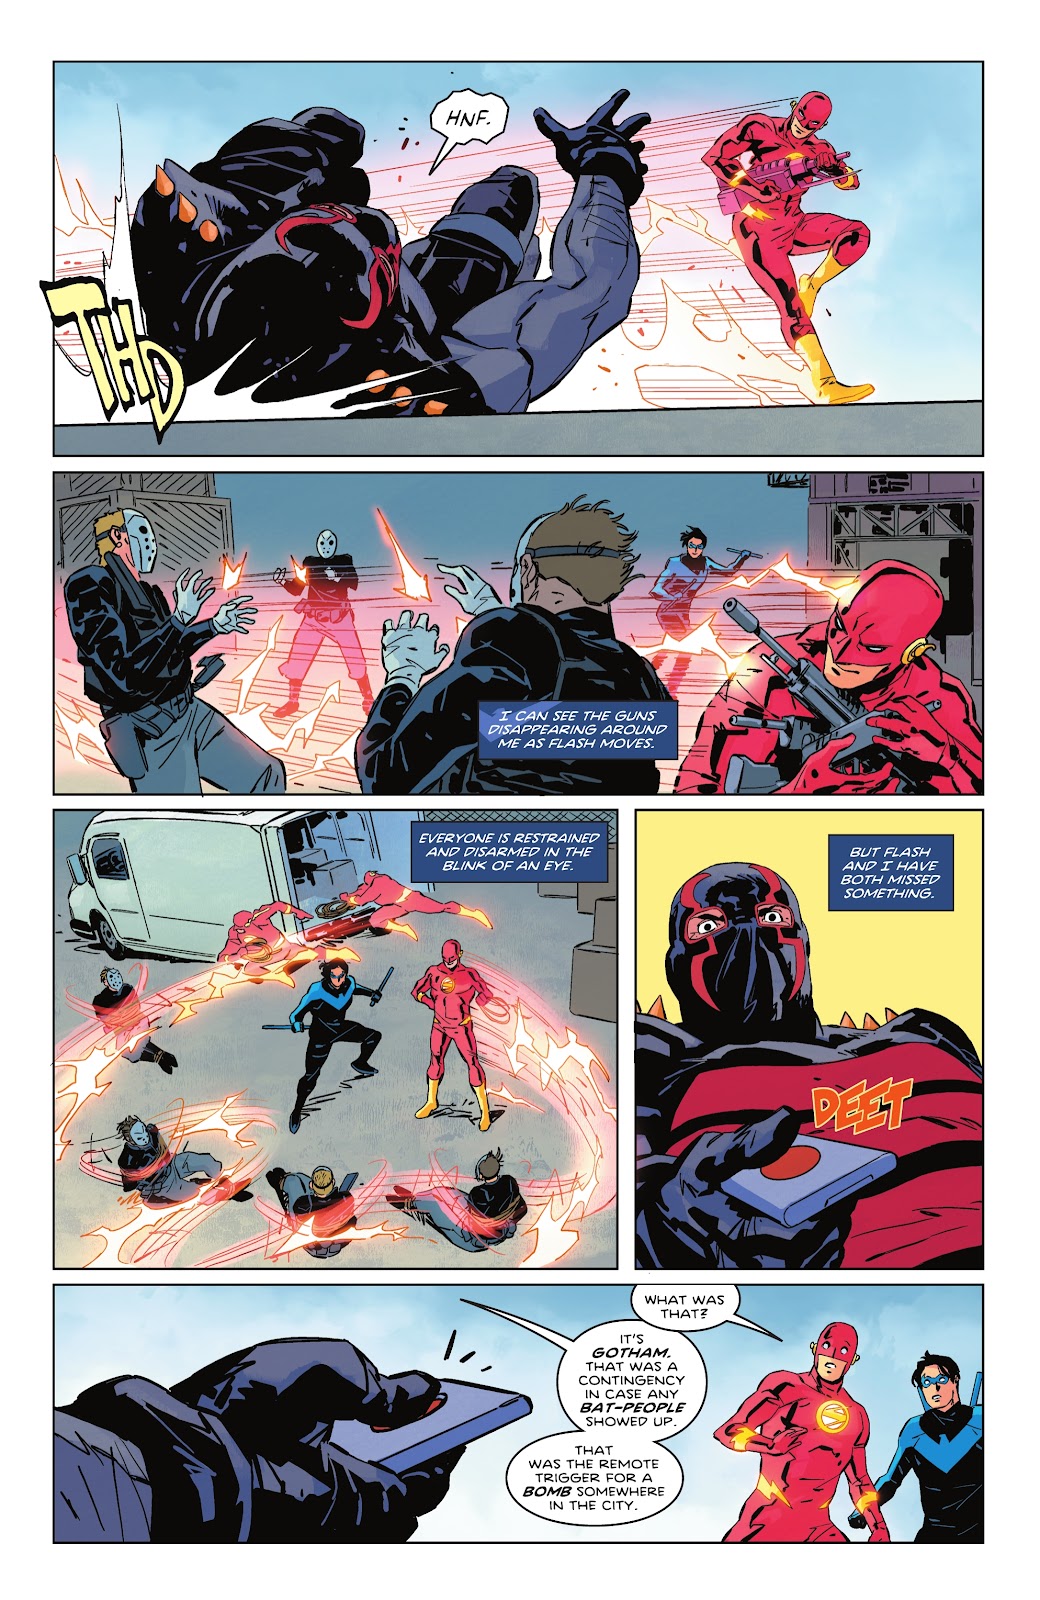 The Flash VS KGBeast 